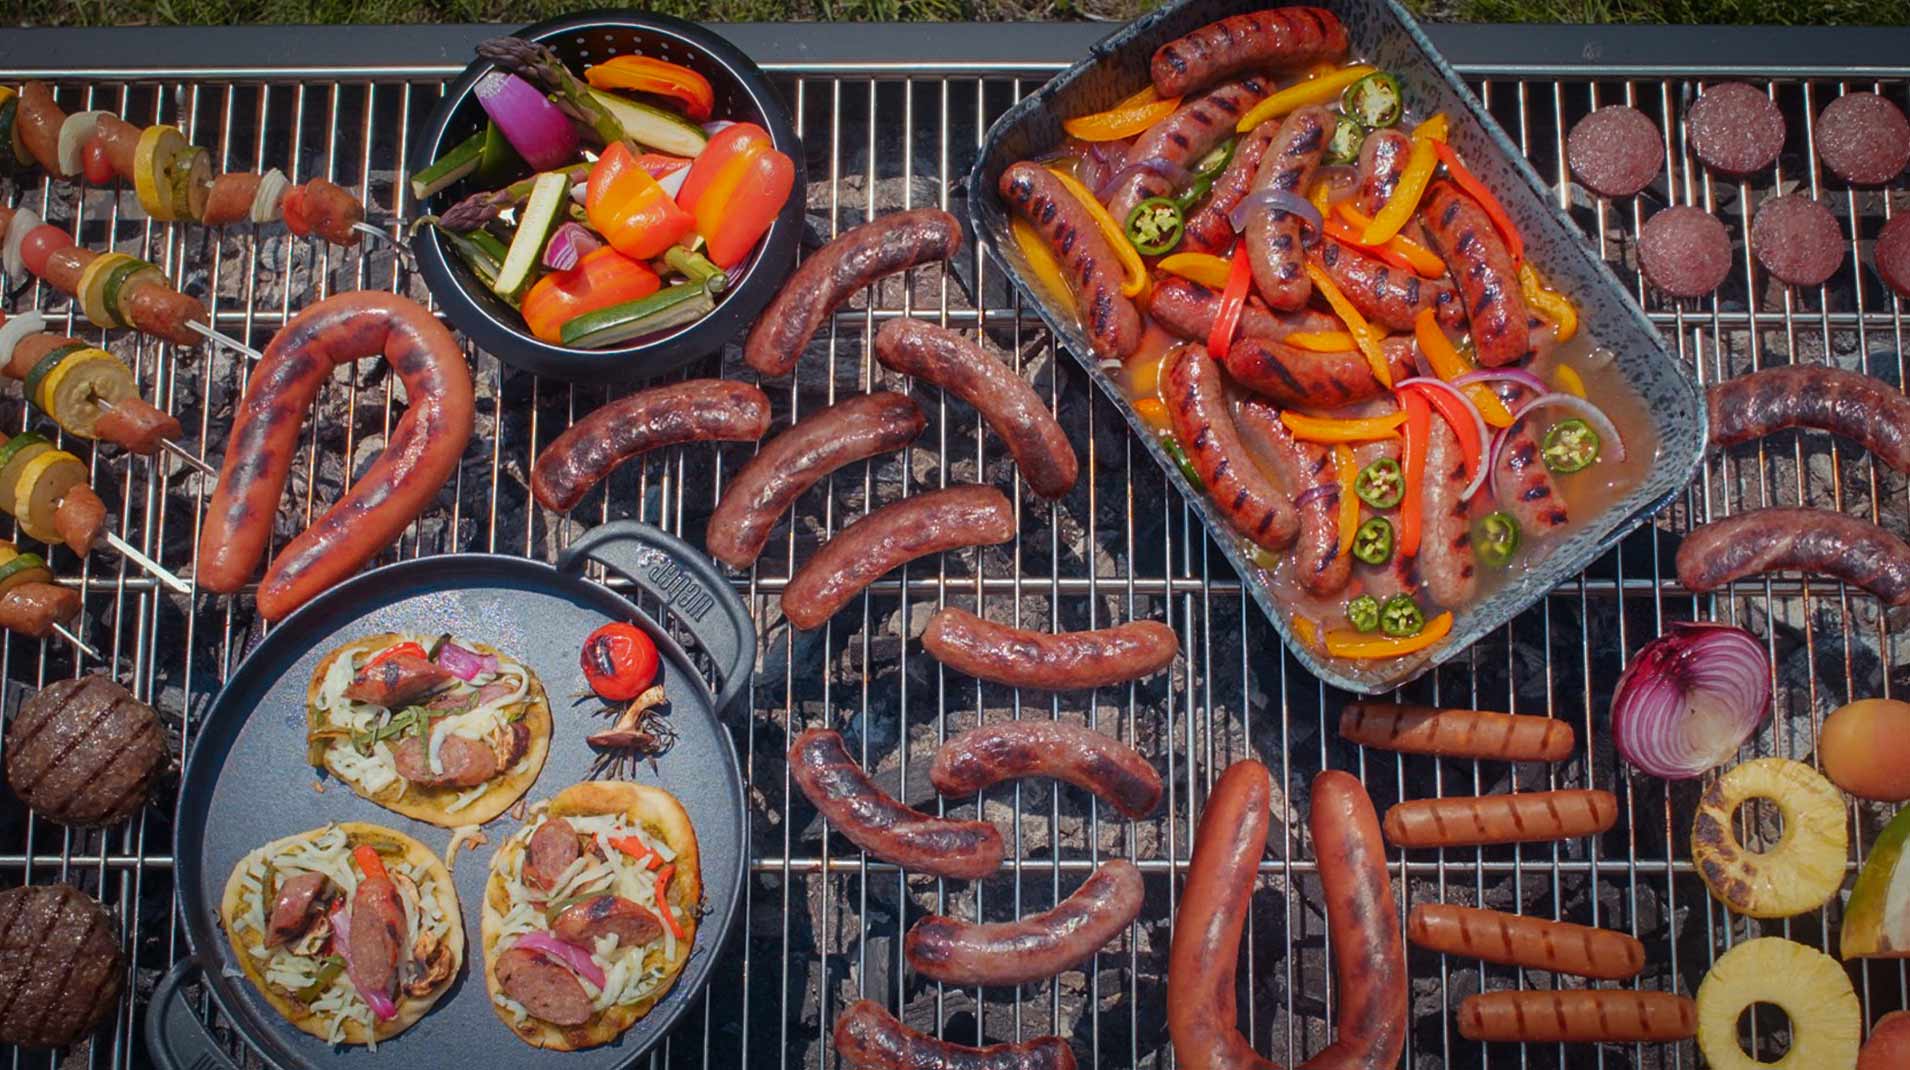 Johnsonville sausage & vegitibales in grill